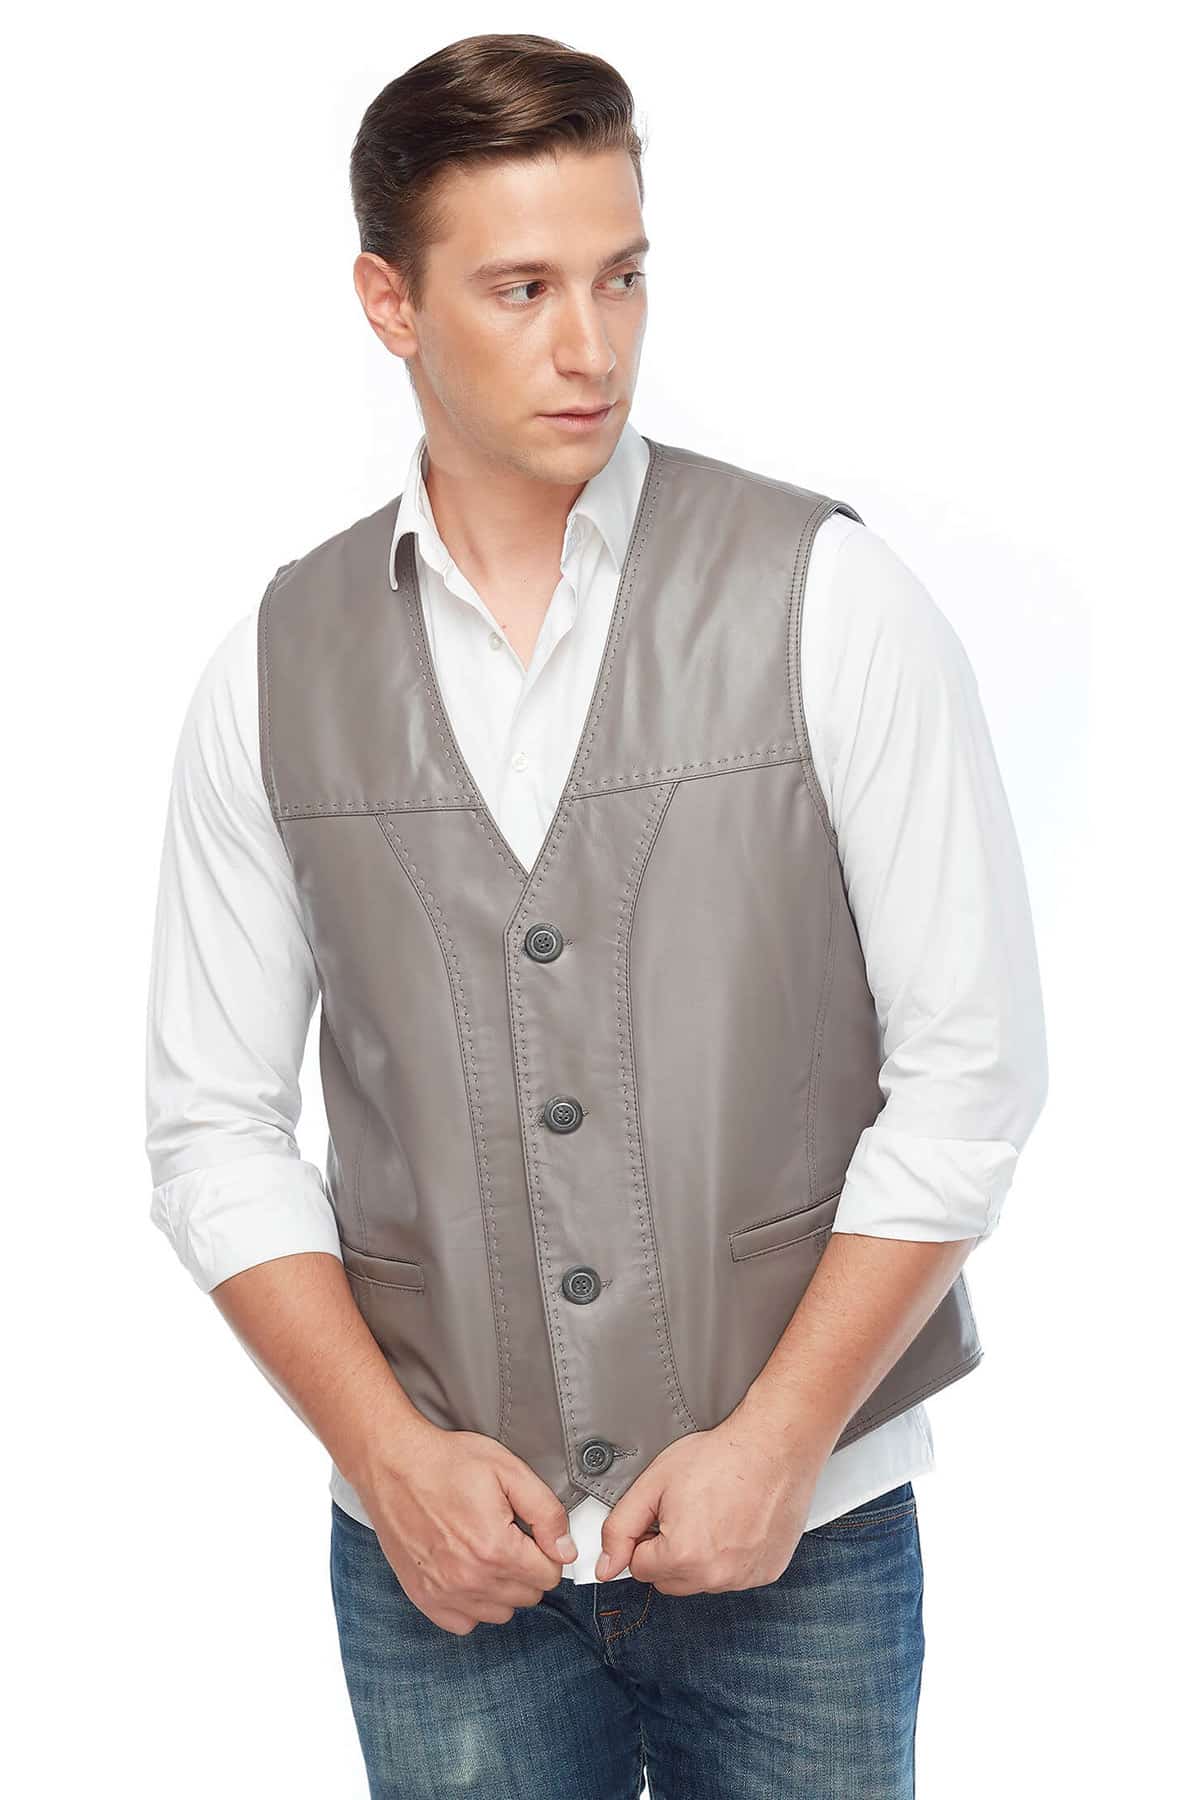 Joseph Taupe Genuine Leather Vest Pose